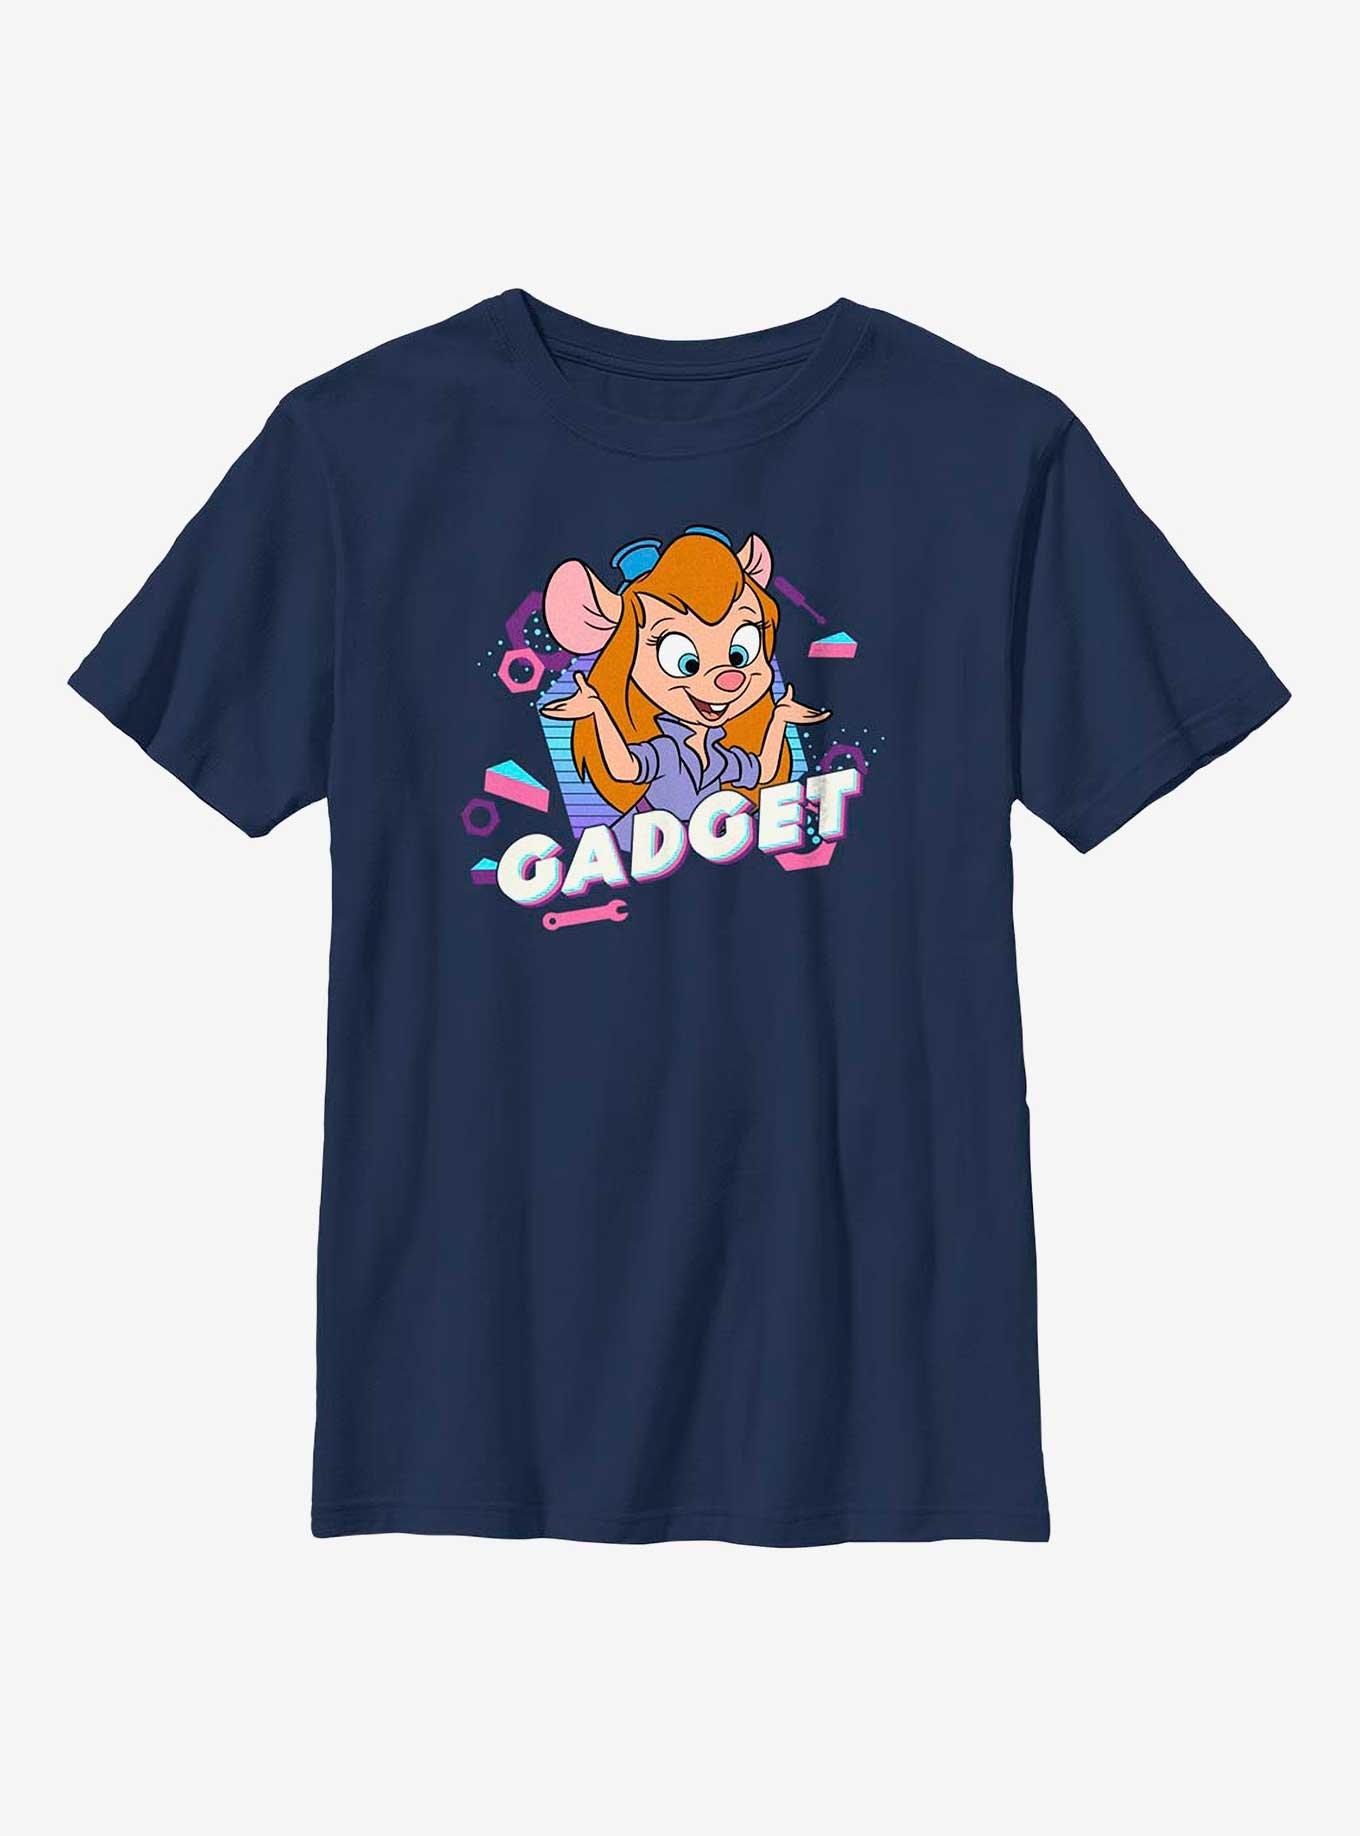 Disney Chip 'n Dale Gadget Youth T-Shirt, NAVY, hi-res